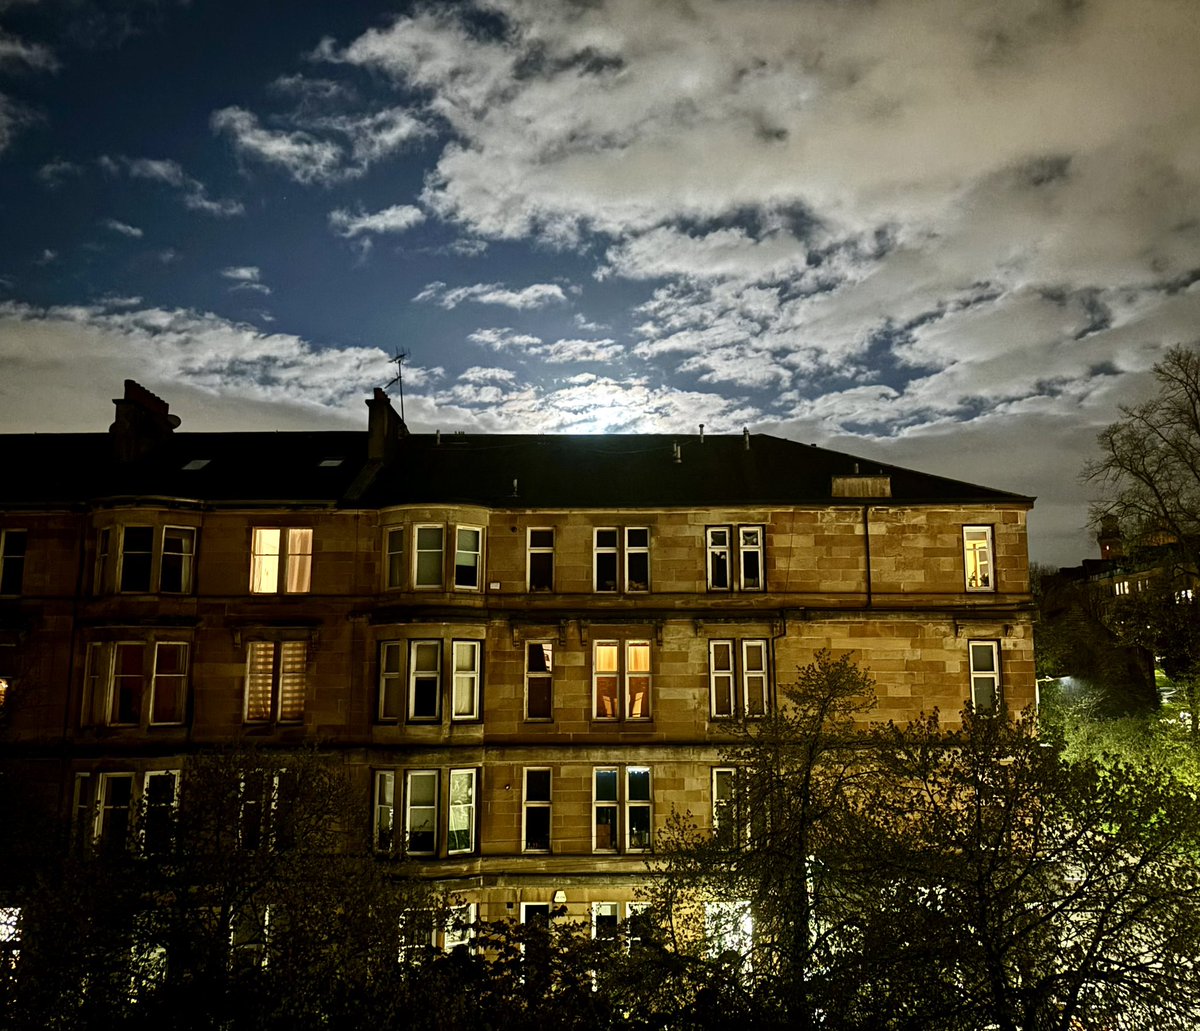 Full moon hiding behind a Glasgow tenement 💙 #Glasgow #fullmoon